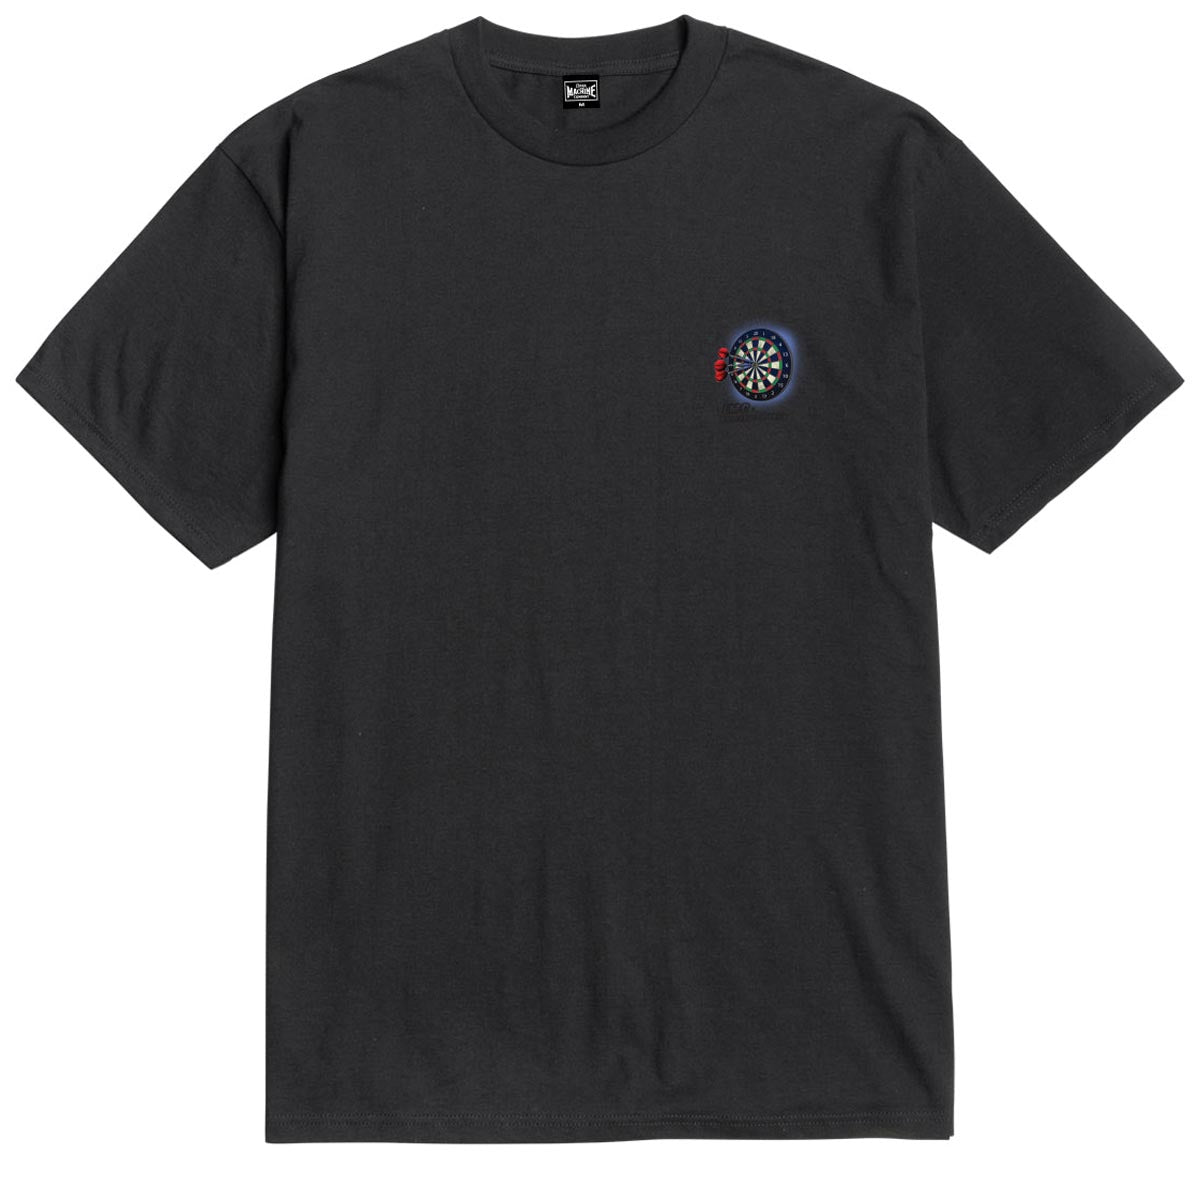 Loser Machine Darts & Beer T-Shirt - Black image 2